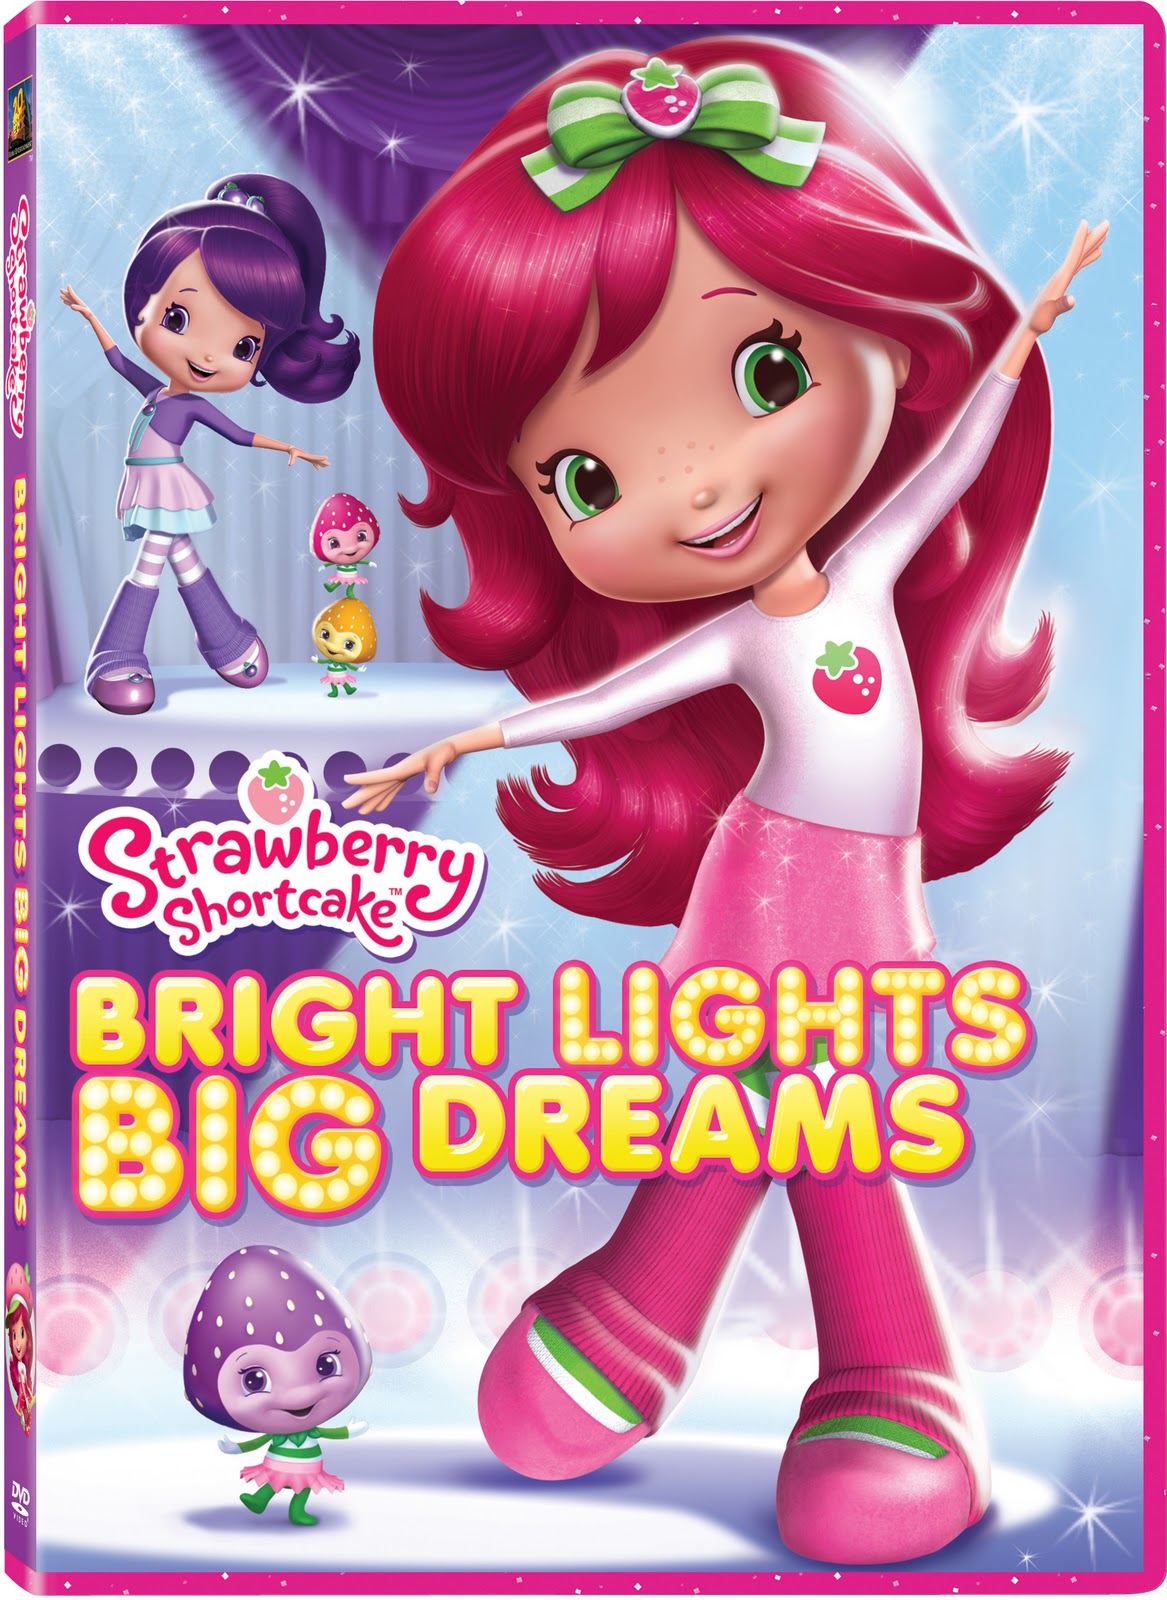 strawberry shortcake bright lights big dreams - Sawa B6 Ctrawberry Ights Big Dream Oshortcake Bright Lights Big Dreams